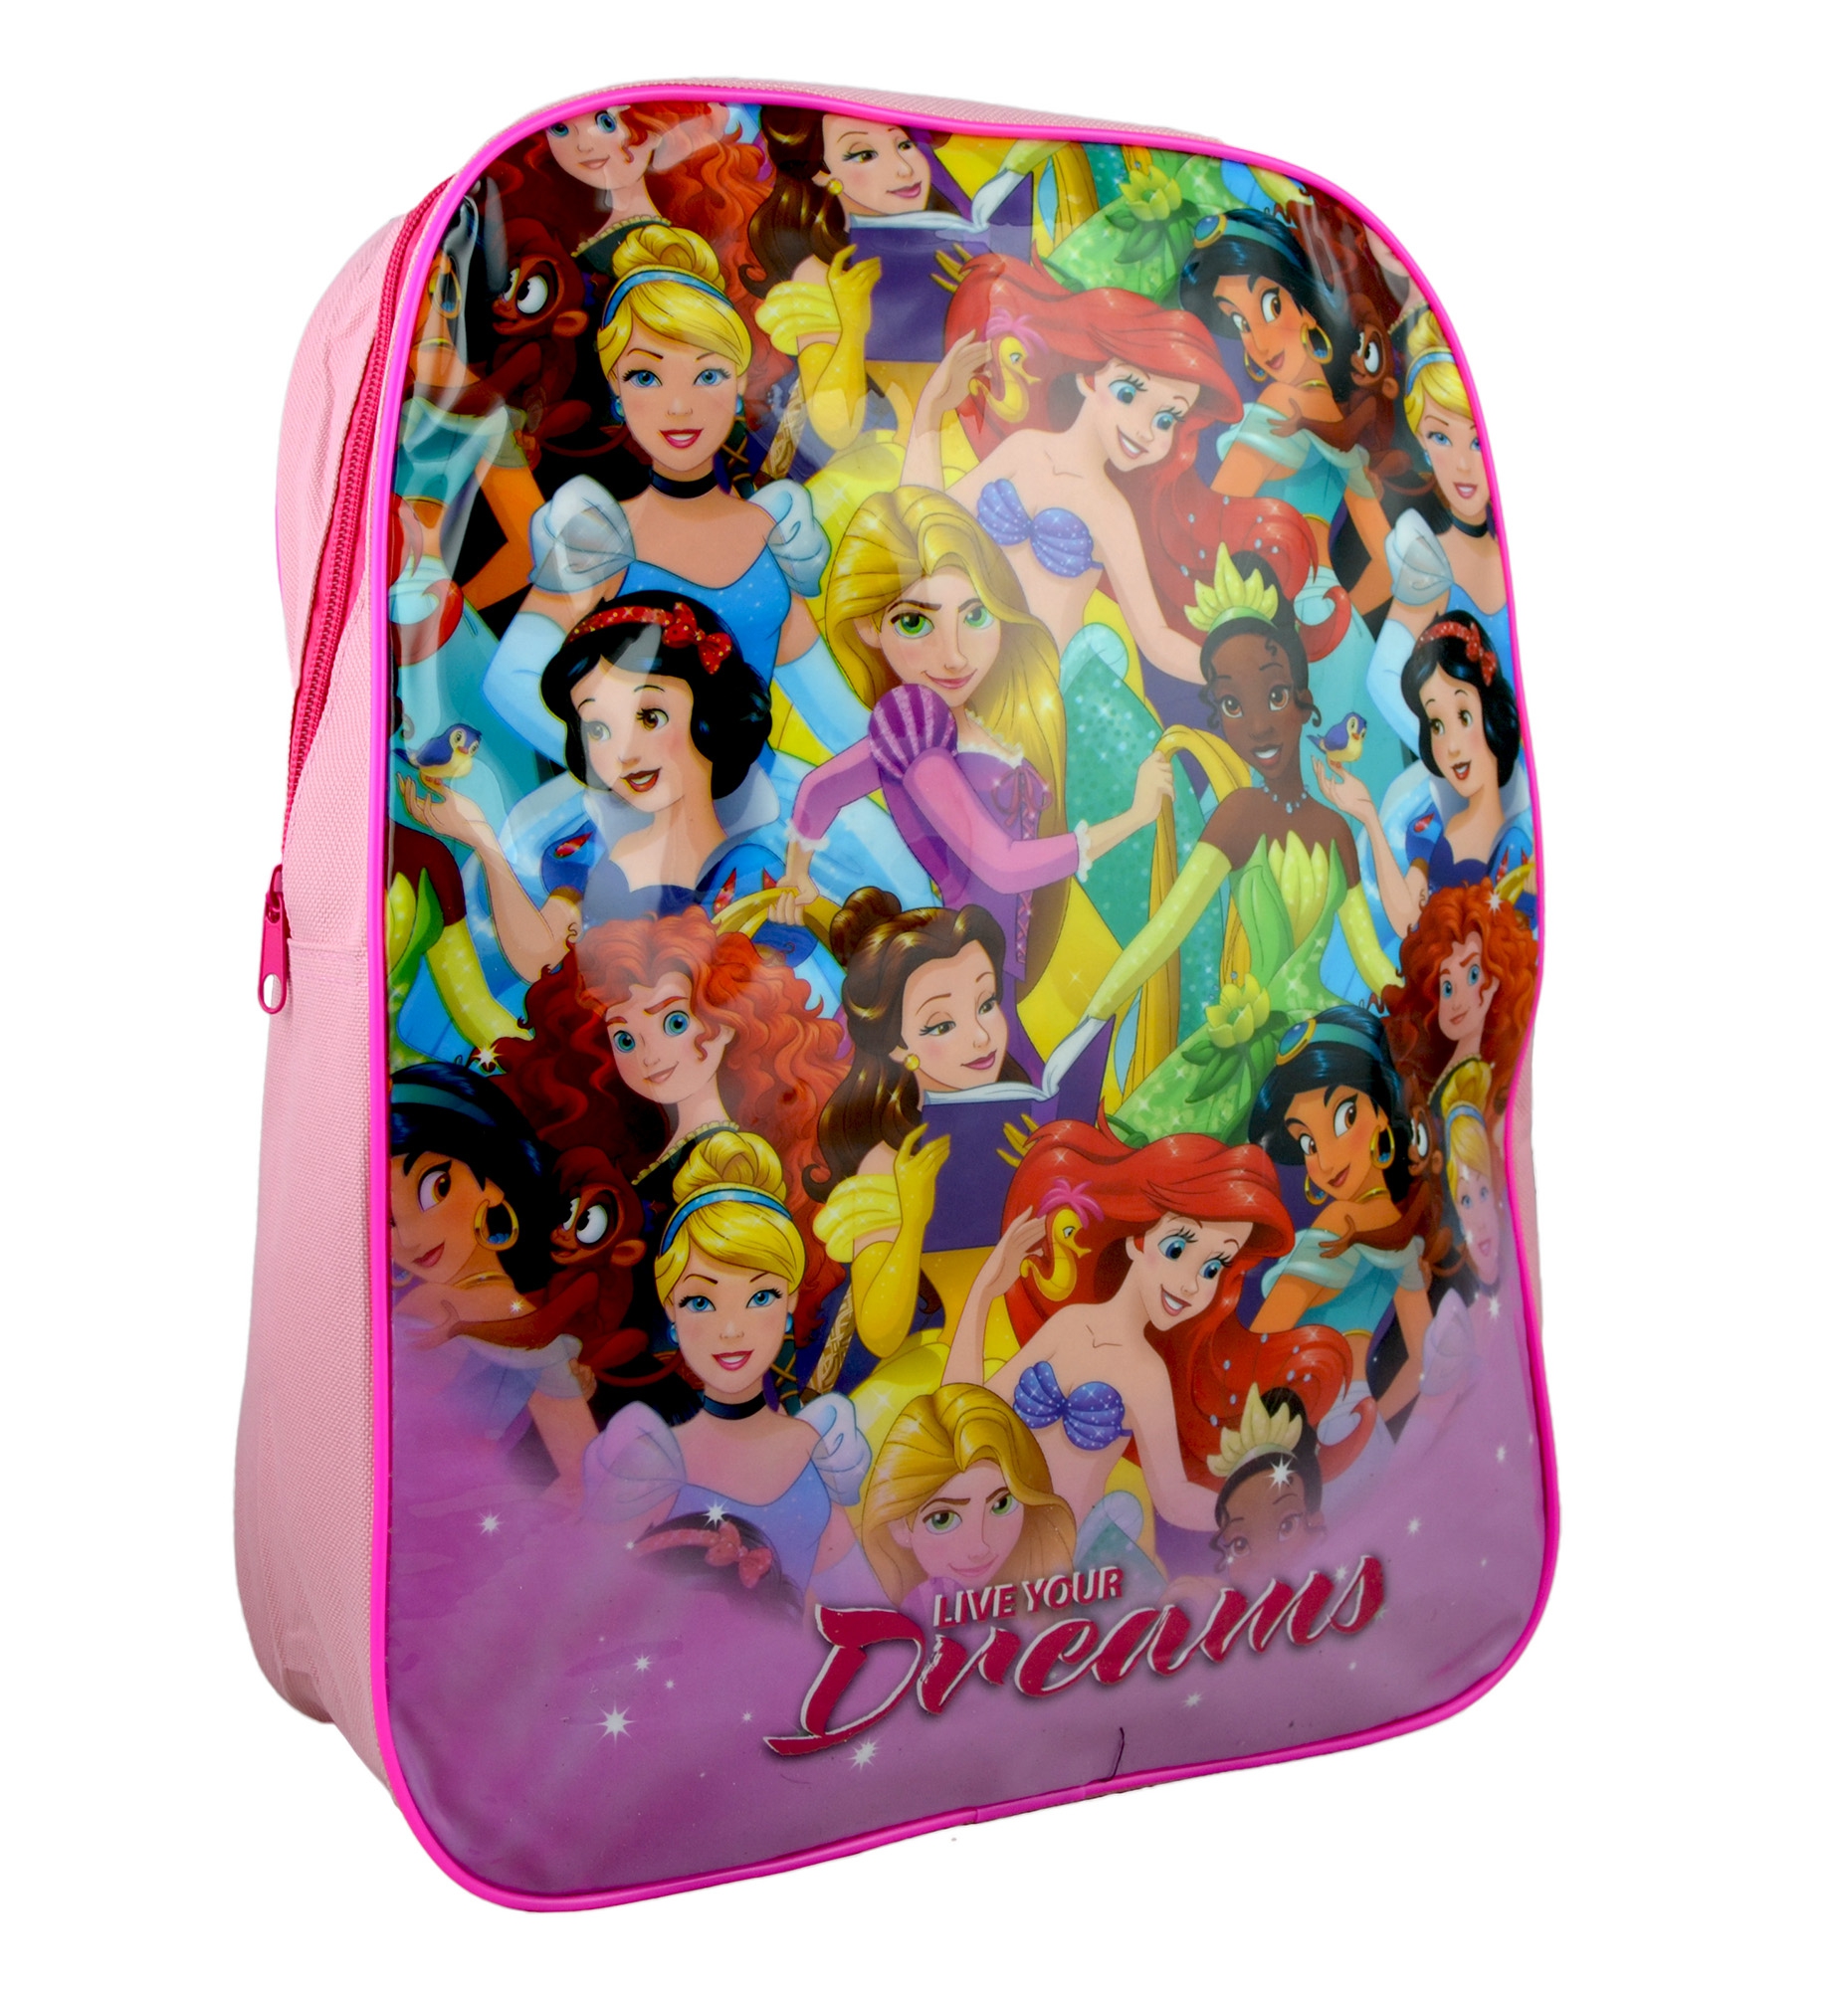 Disney Princess 'Live Your Dreams' Arch School Bag Rucksack Backpack